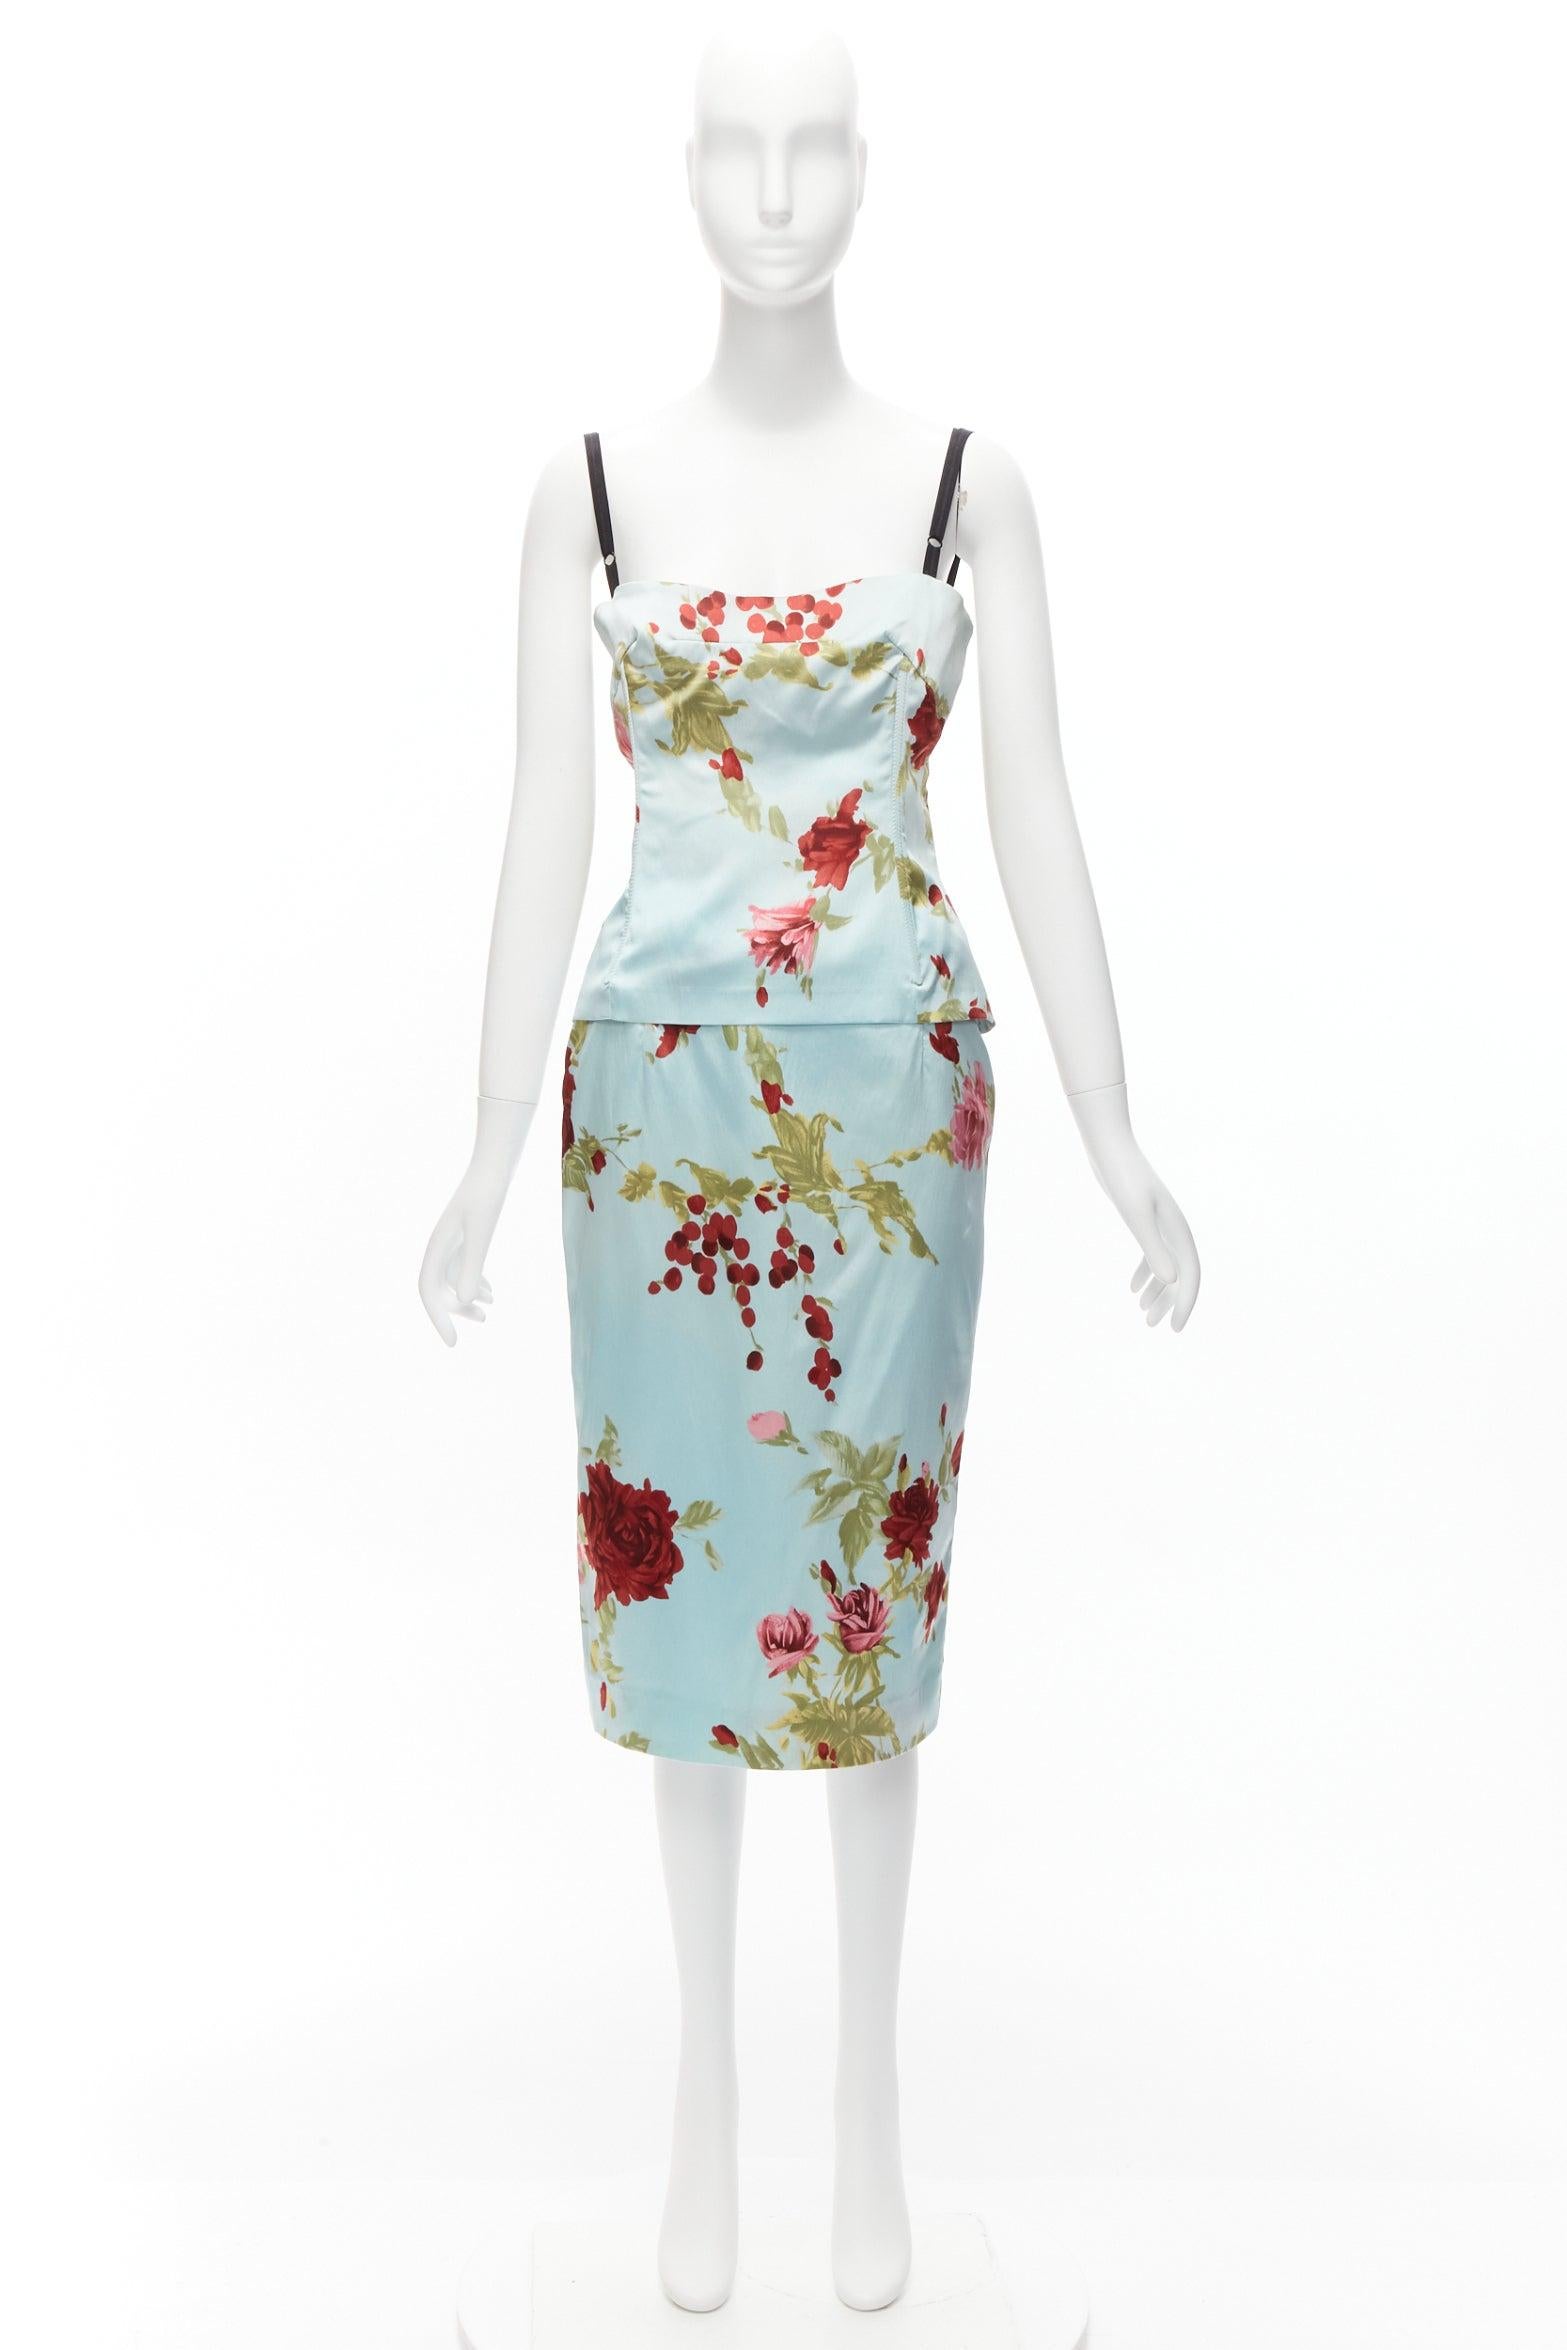 DOLCE GABBANA Vintage floral silk camisole top skirt set IT44 L Carrie Bradshaw For Sale 7